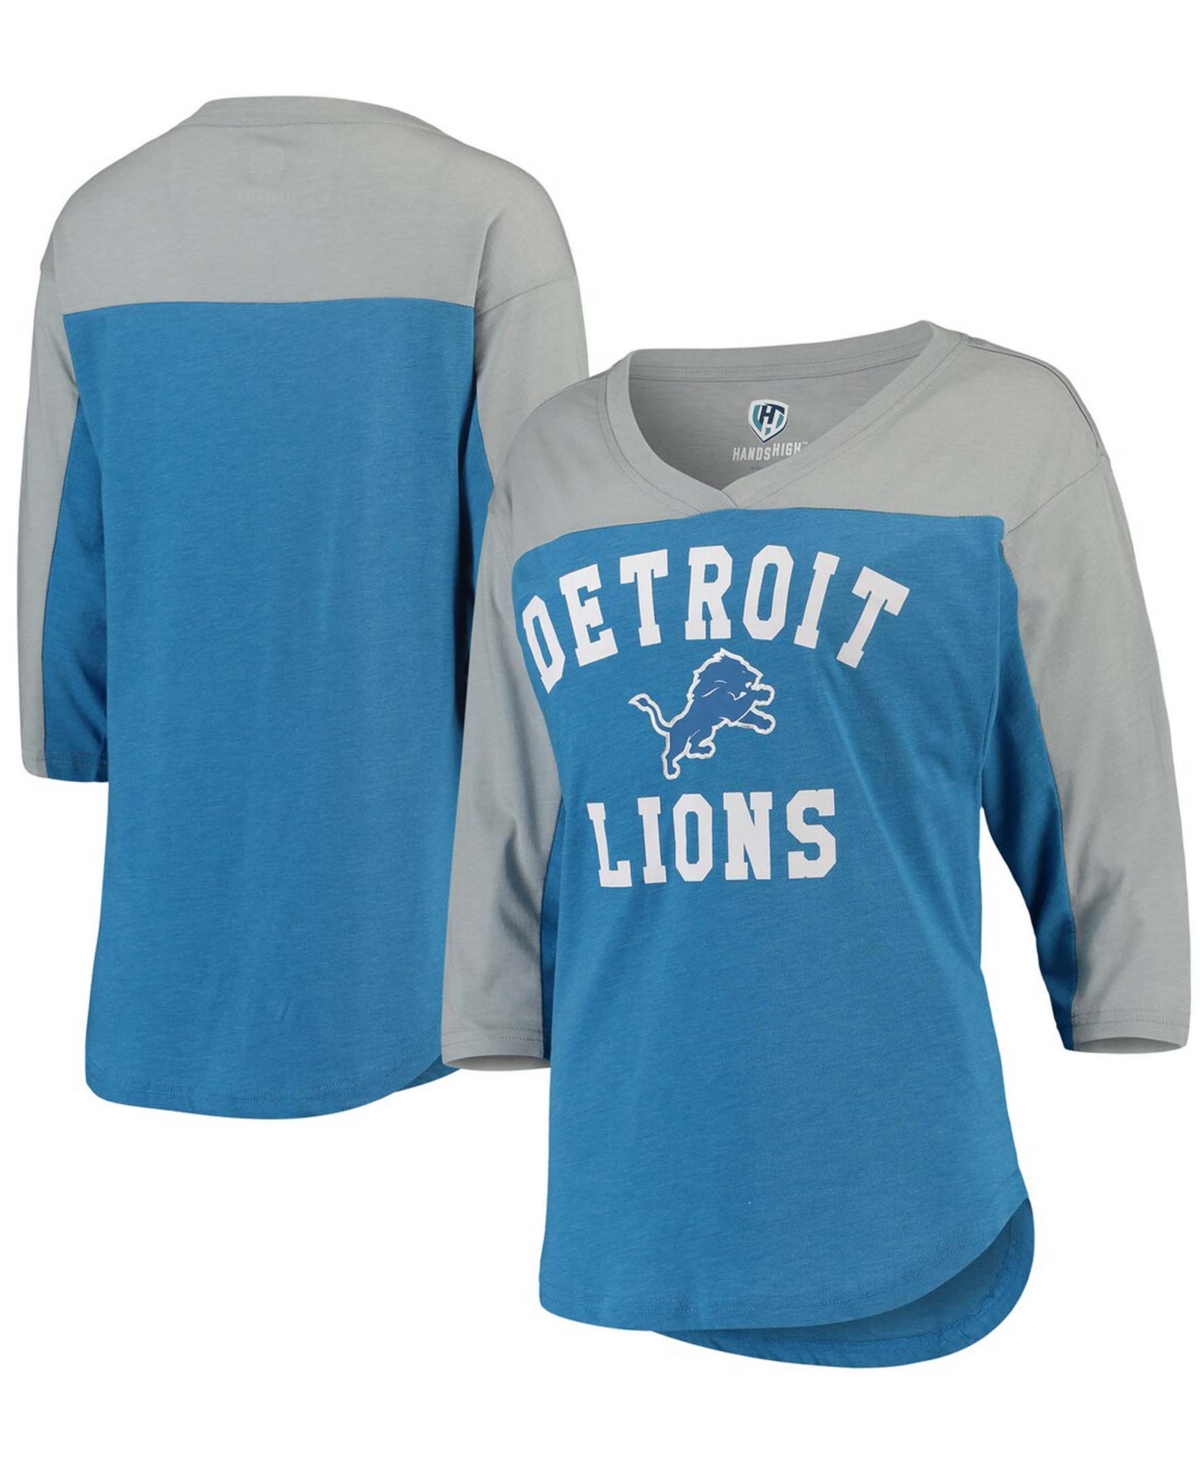 Women's Blue, Gray Detroit Lions In The Zone 3/4 Sleeve V-Neck T-shirt